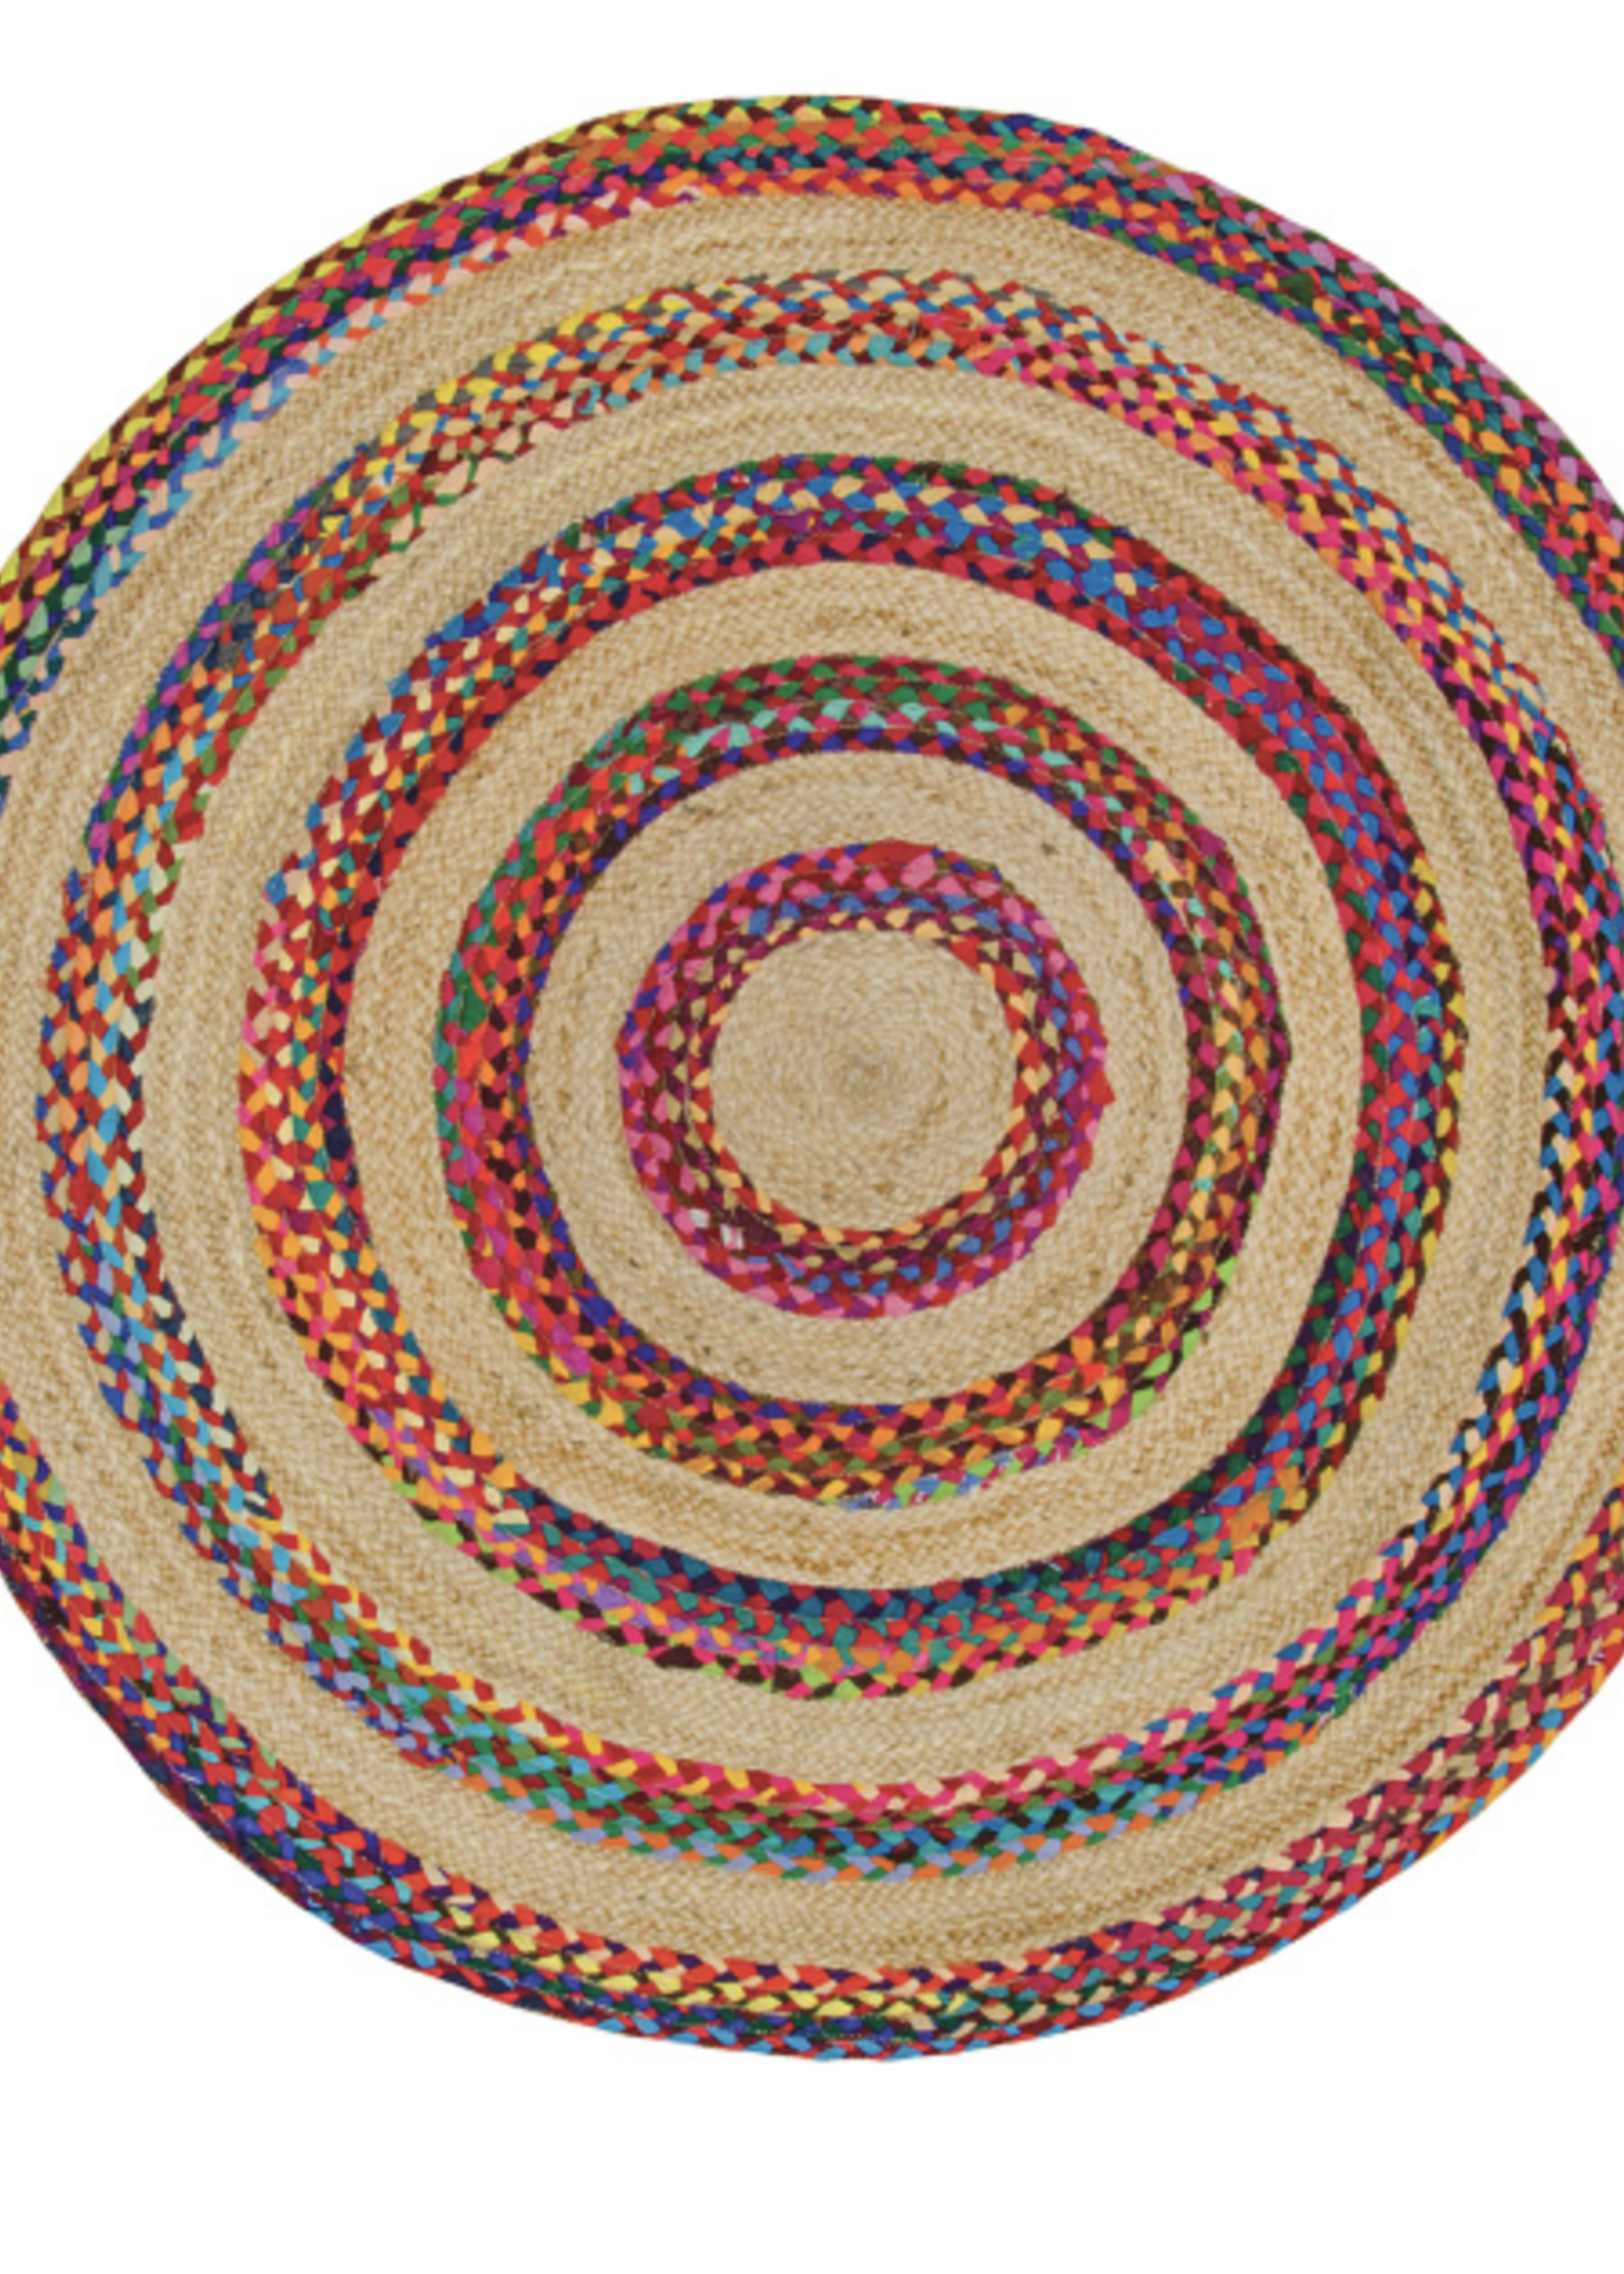 Namaste Jute & Multi Chindi Braided Round Rug, 120cm